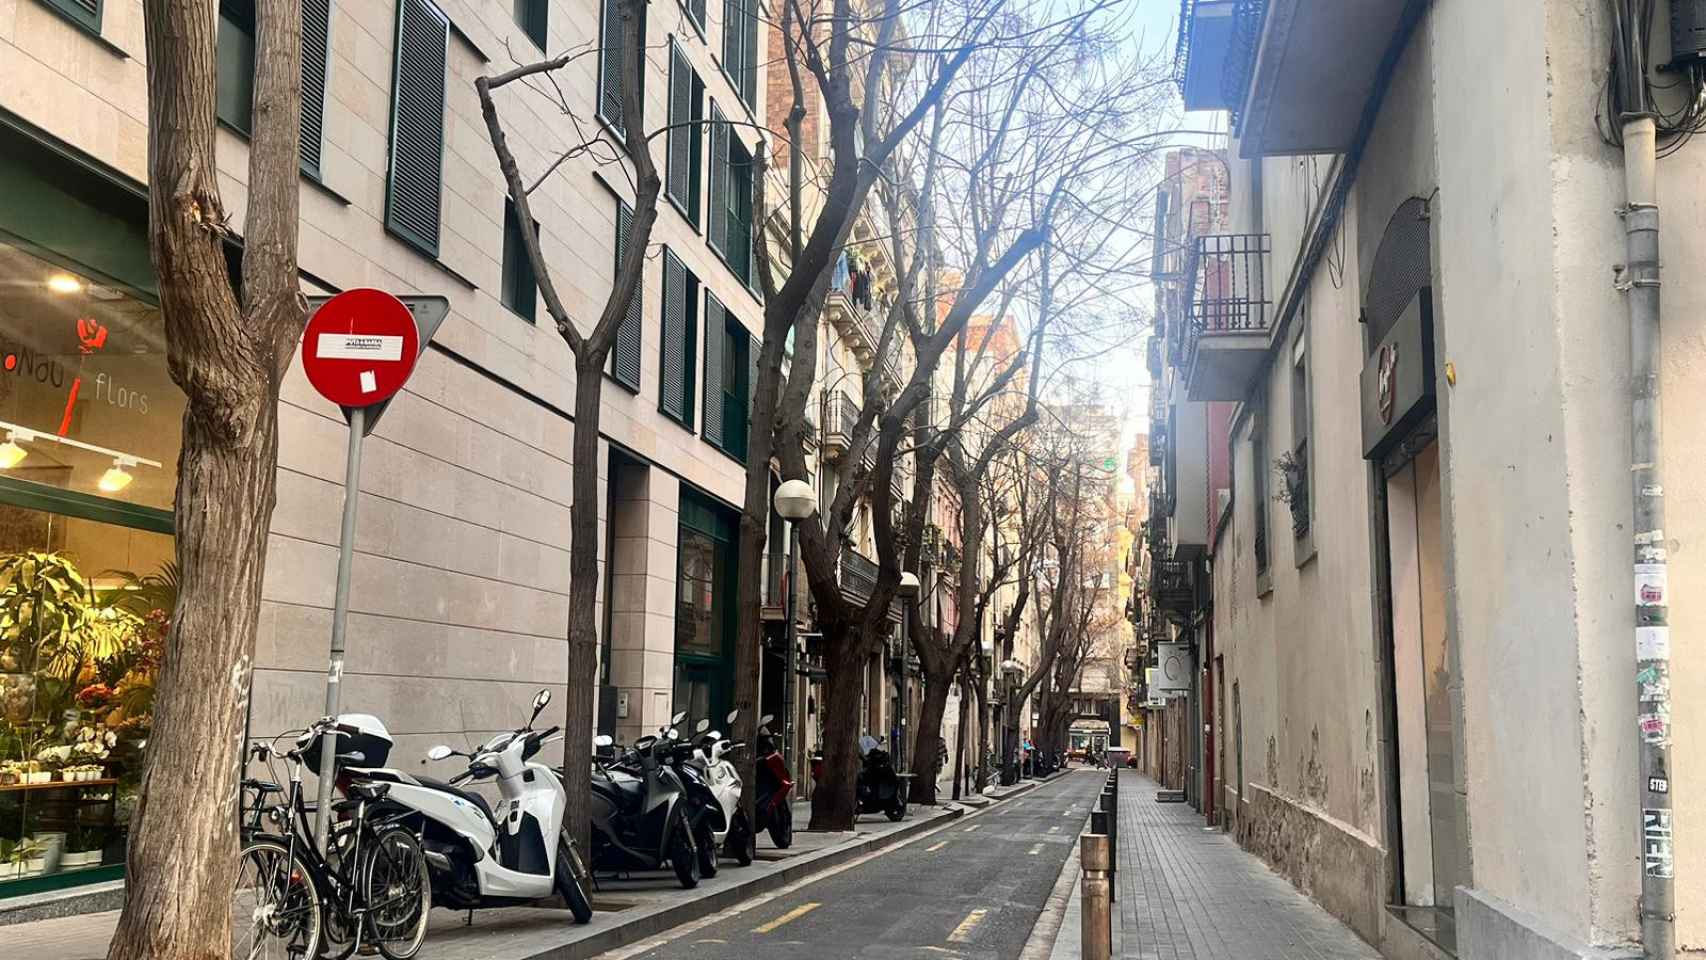 El acceso al Passatge de Batlló donde se encuentra el narcopiso